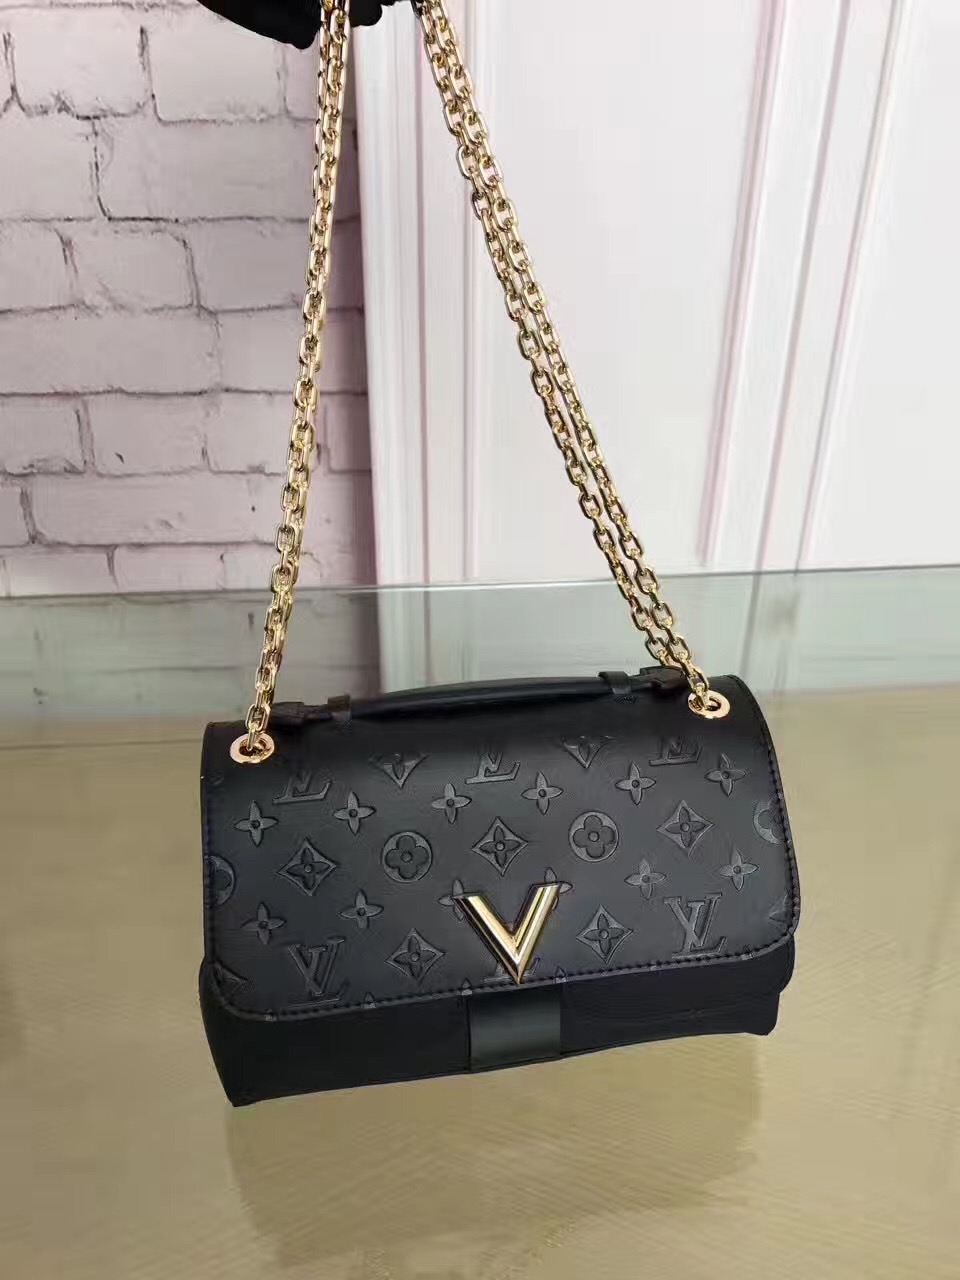 The Best Louis Vuitton 1:1 Replica Handbags Online Store